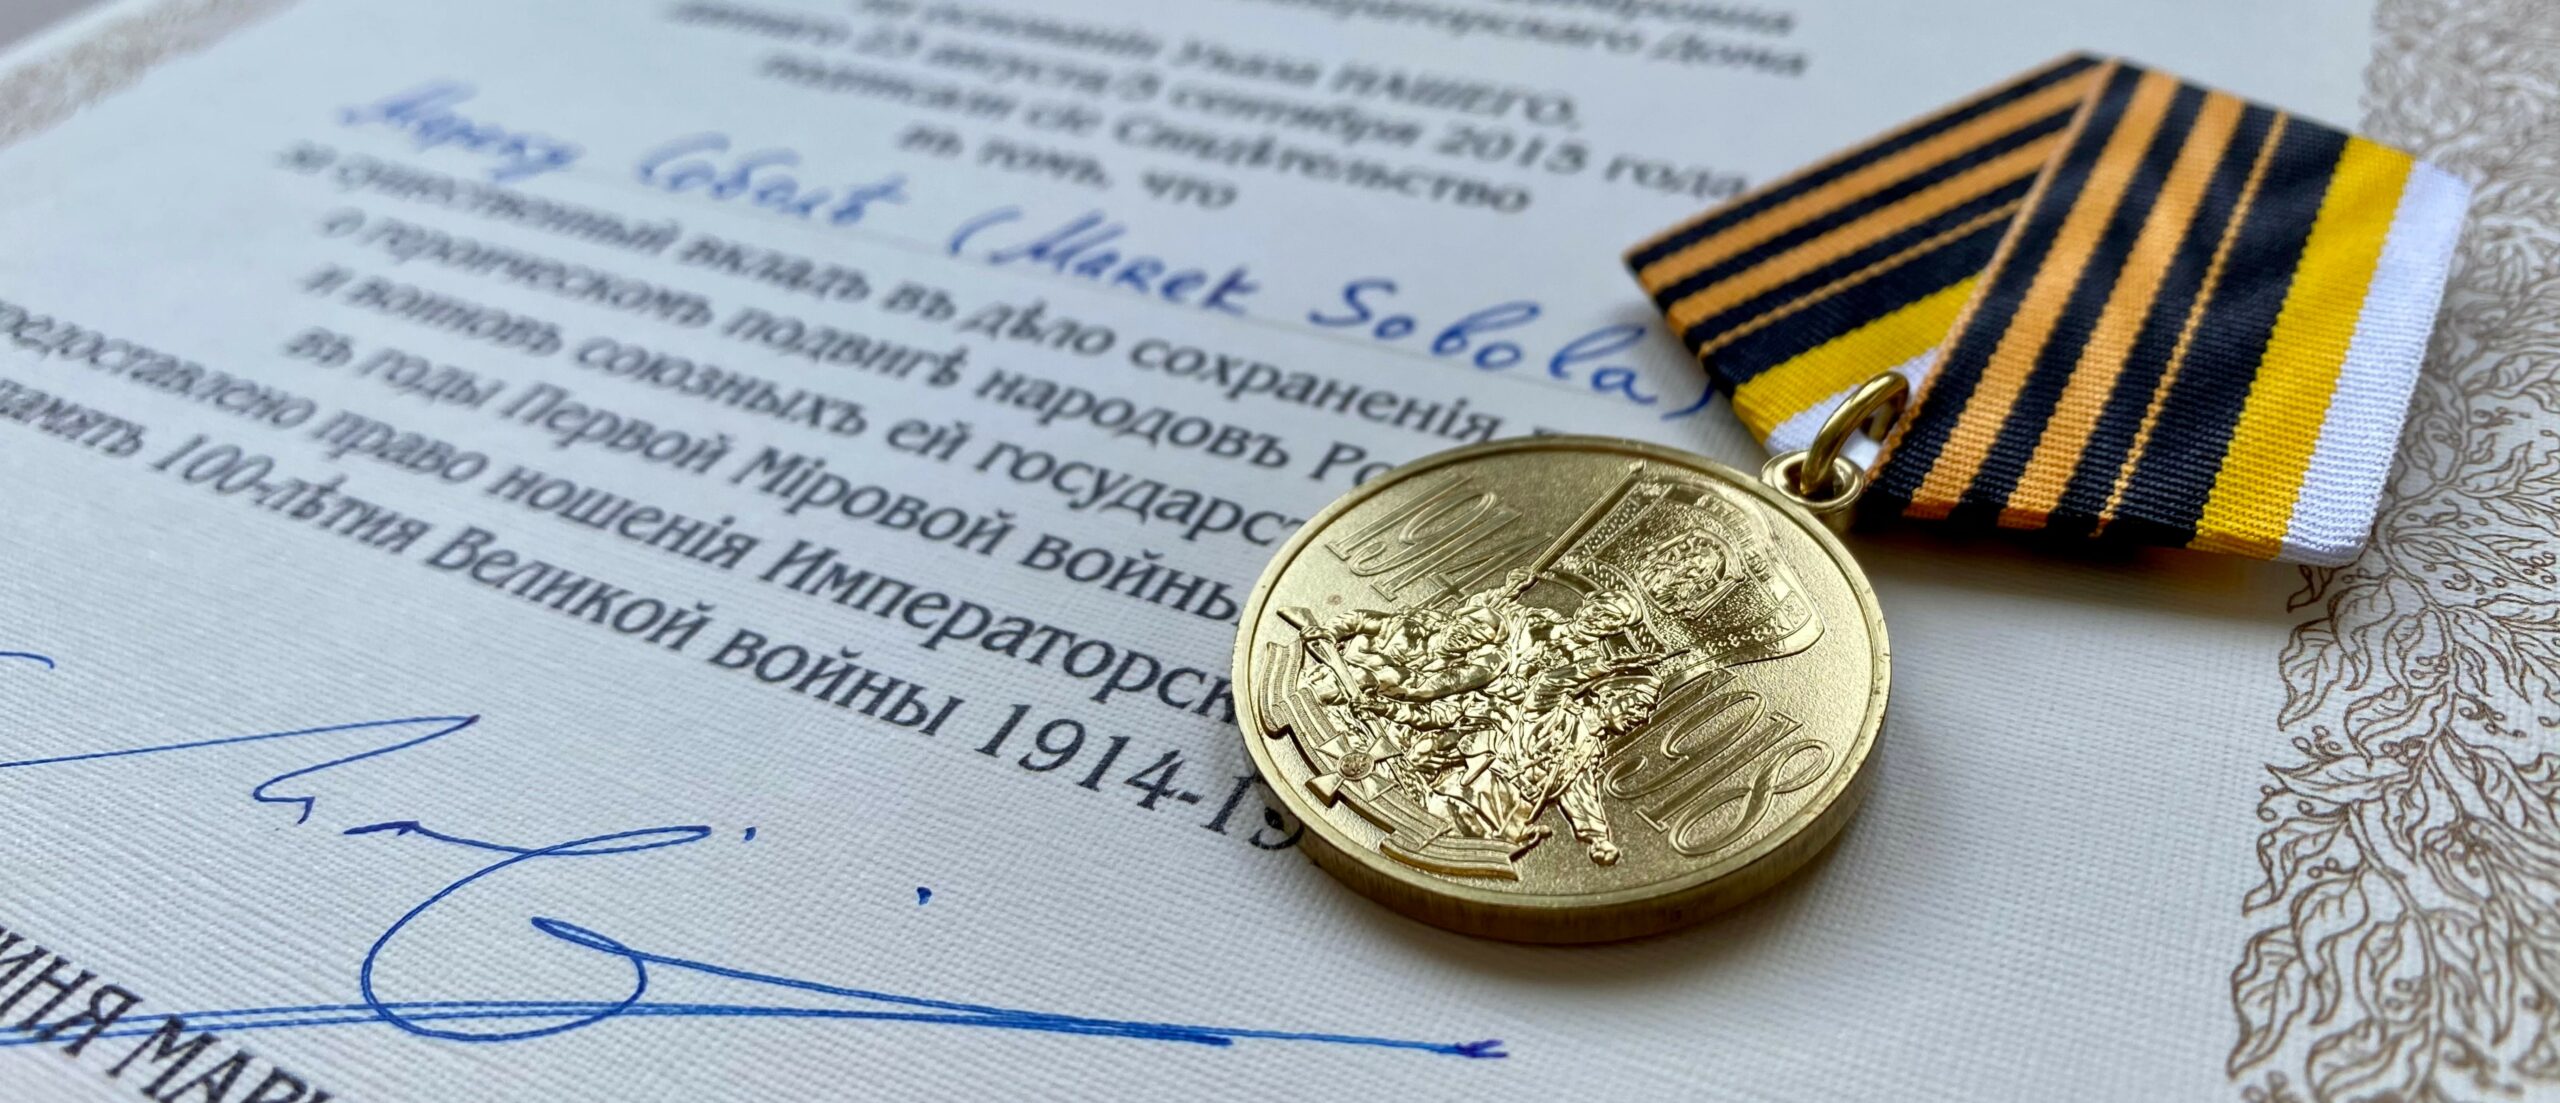 Marek Sobola_Imperial Commemorative Medal In Memory of the 100th Anniversary of the Great War 1914-1918_Императорская медаль «В память 100-летия Великой войны 1914-1918 гг»